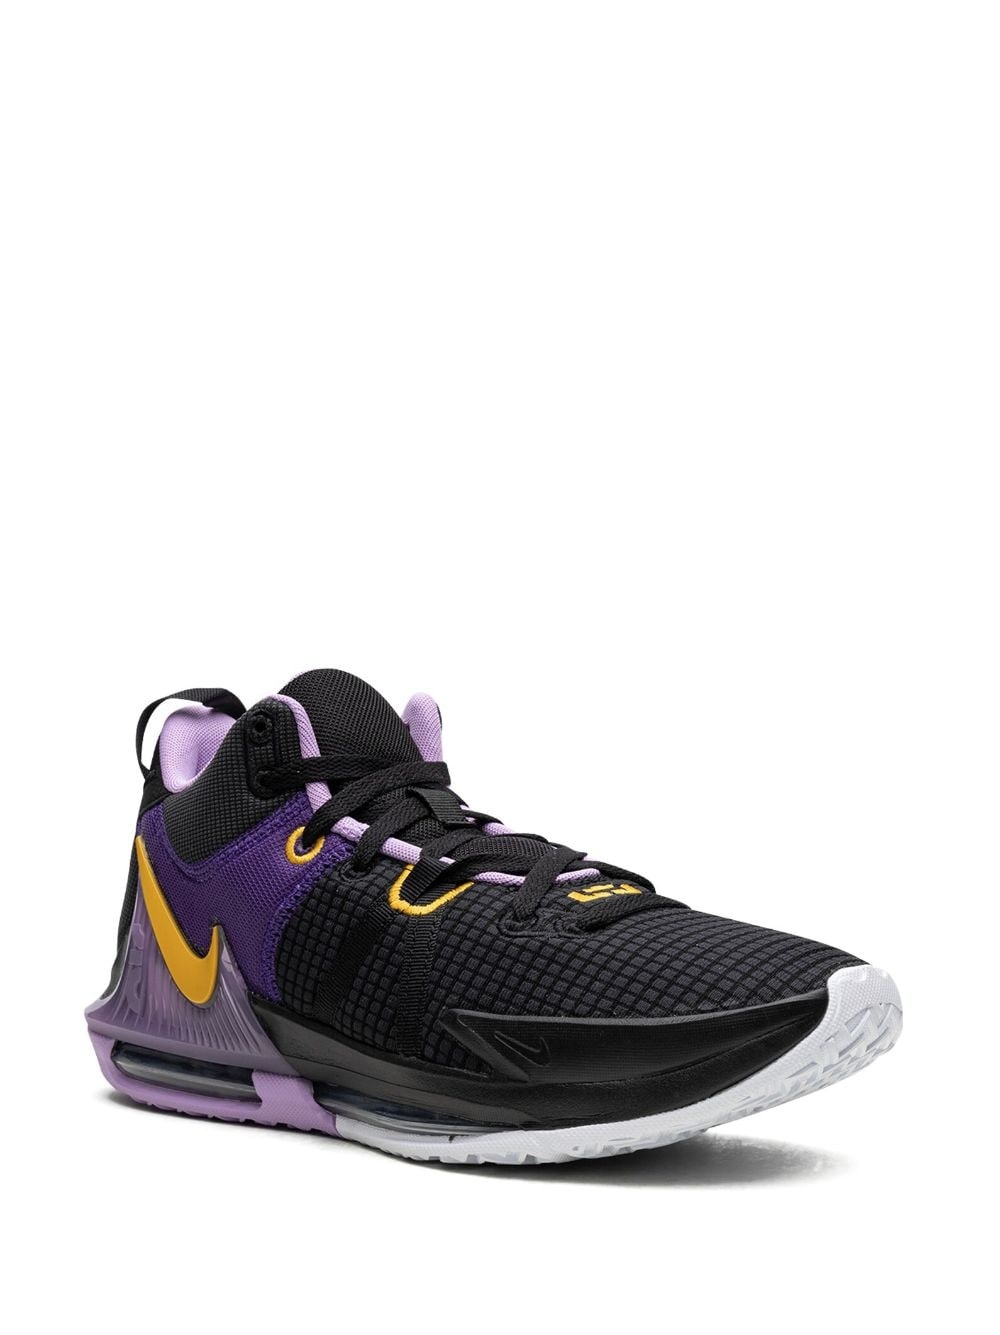 Lebron Witness VII "Lakers" sneakers - 2